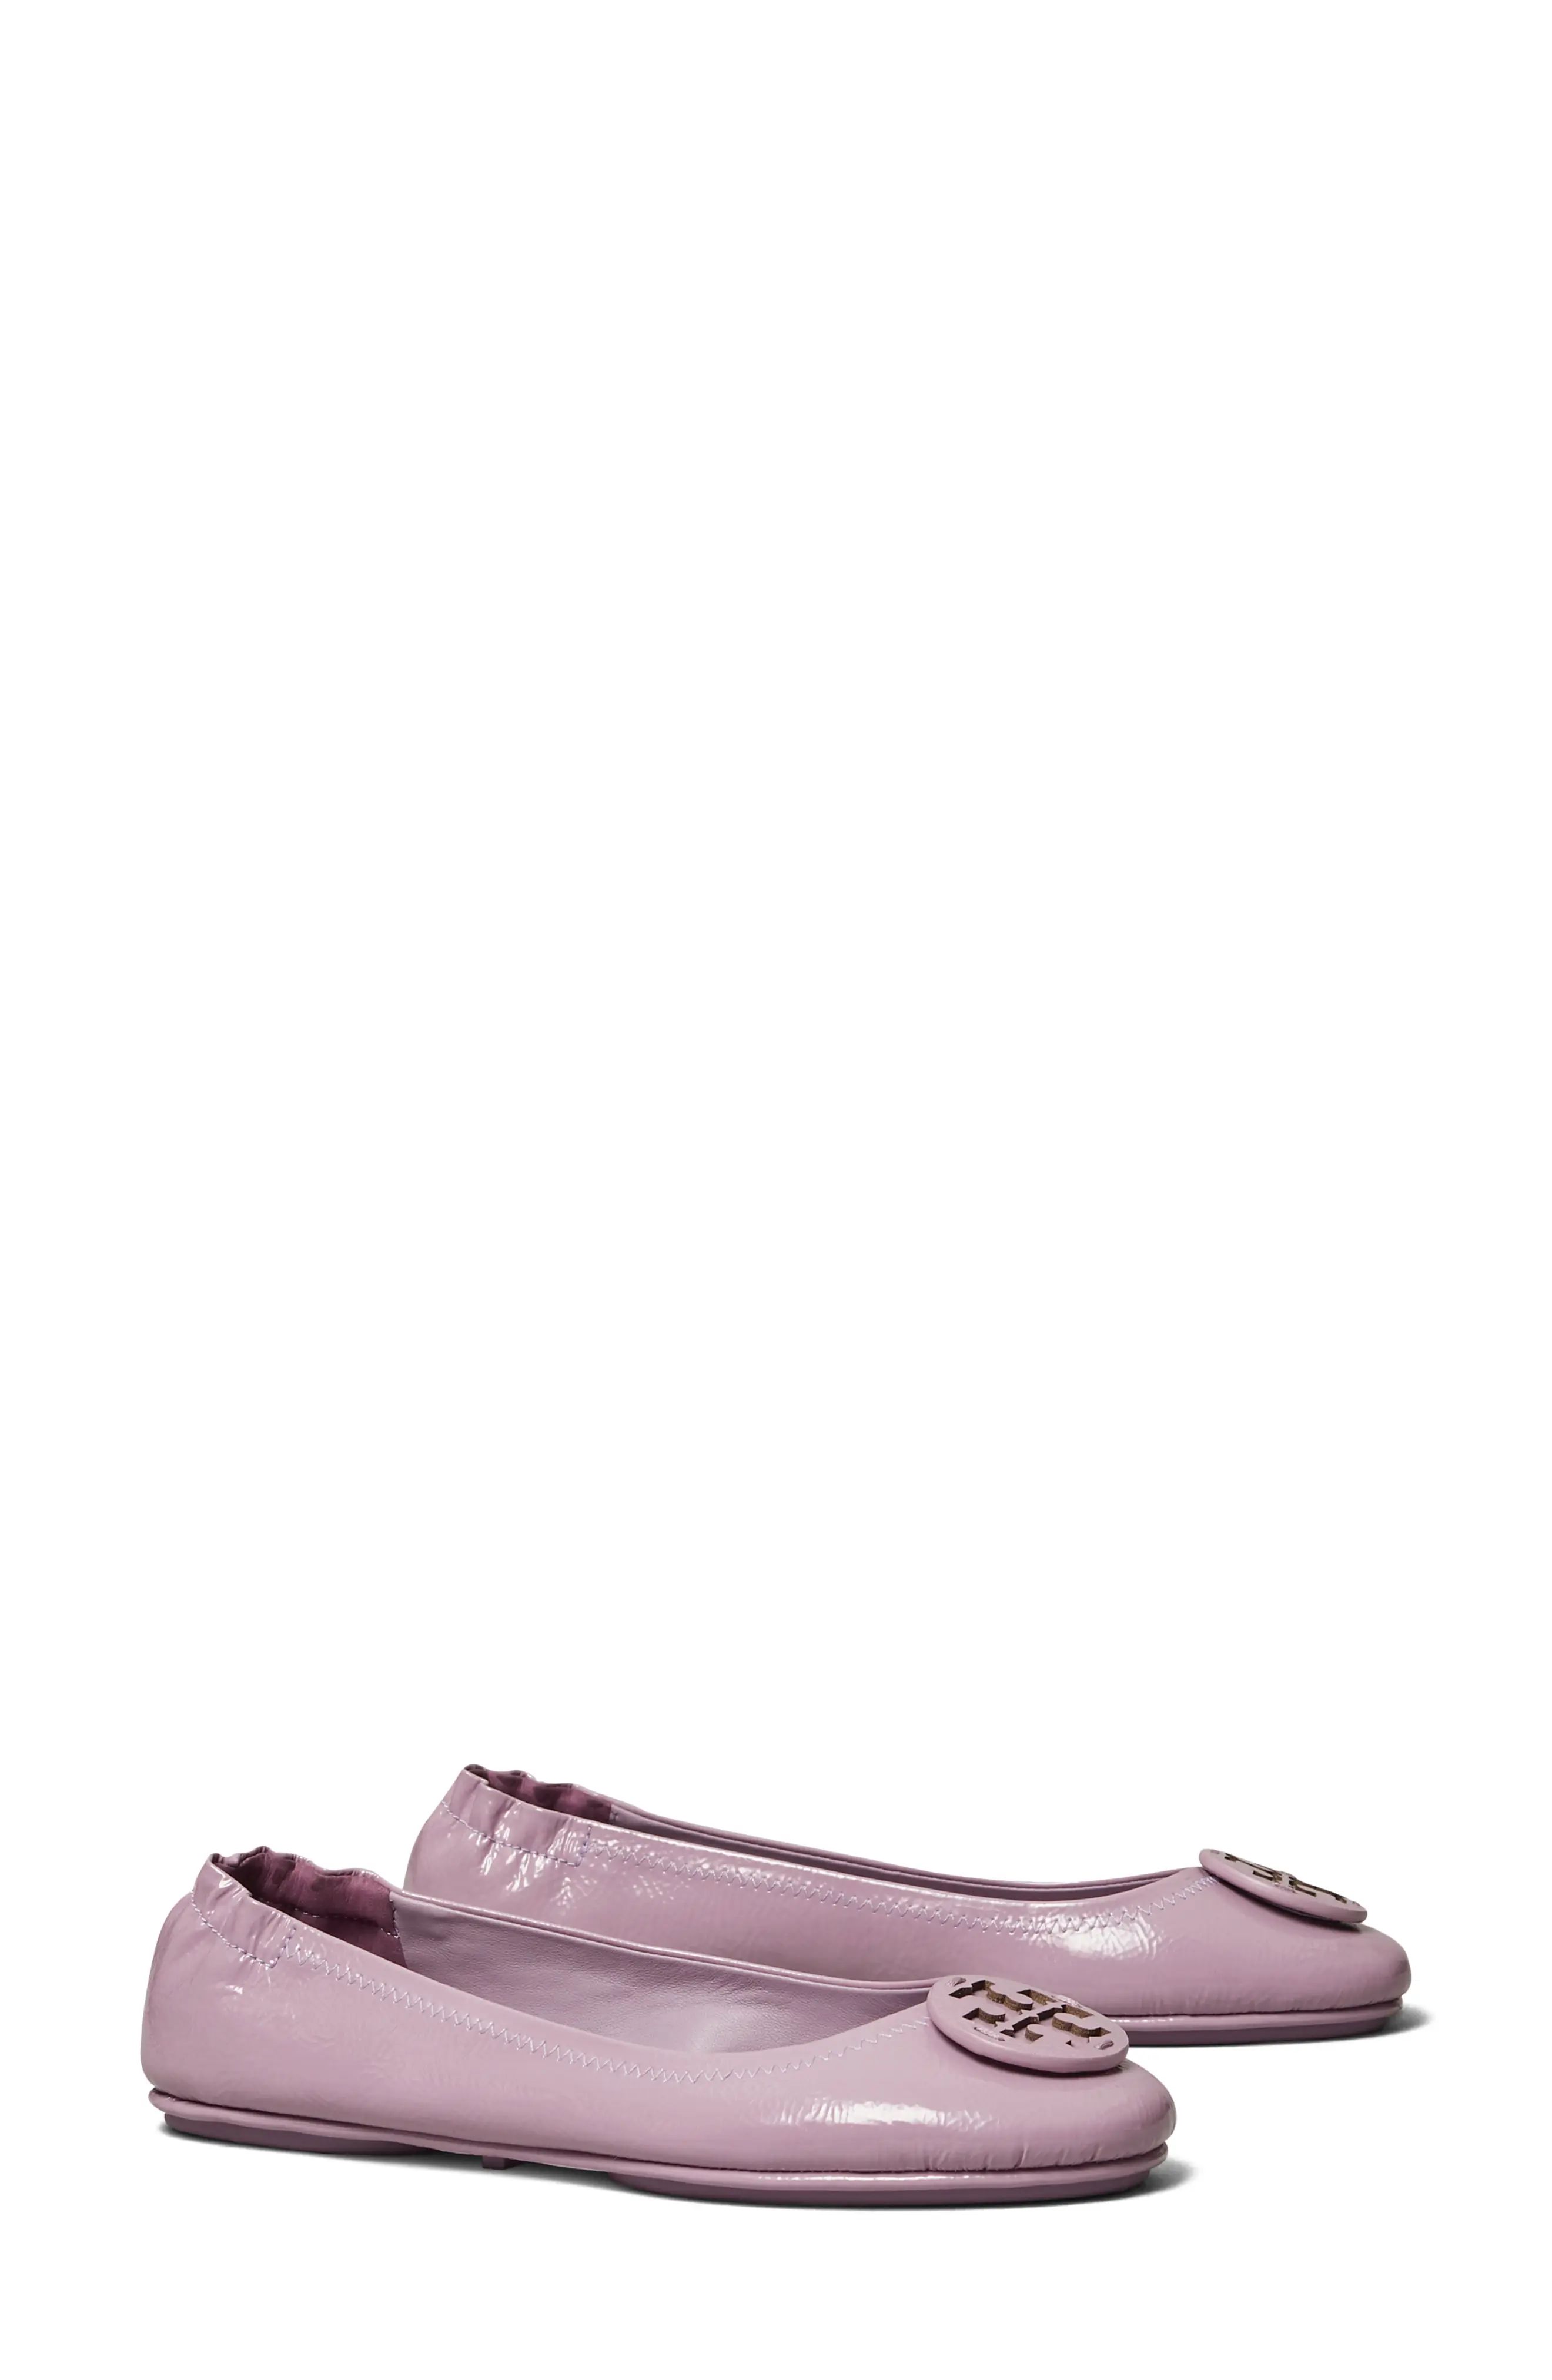 Women's Tory Burch Minnie Travel Ballet Flat, Size 8.5 M - Purple | Nordstrom